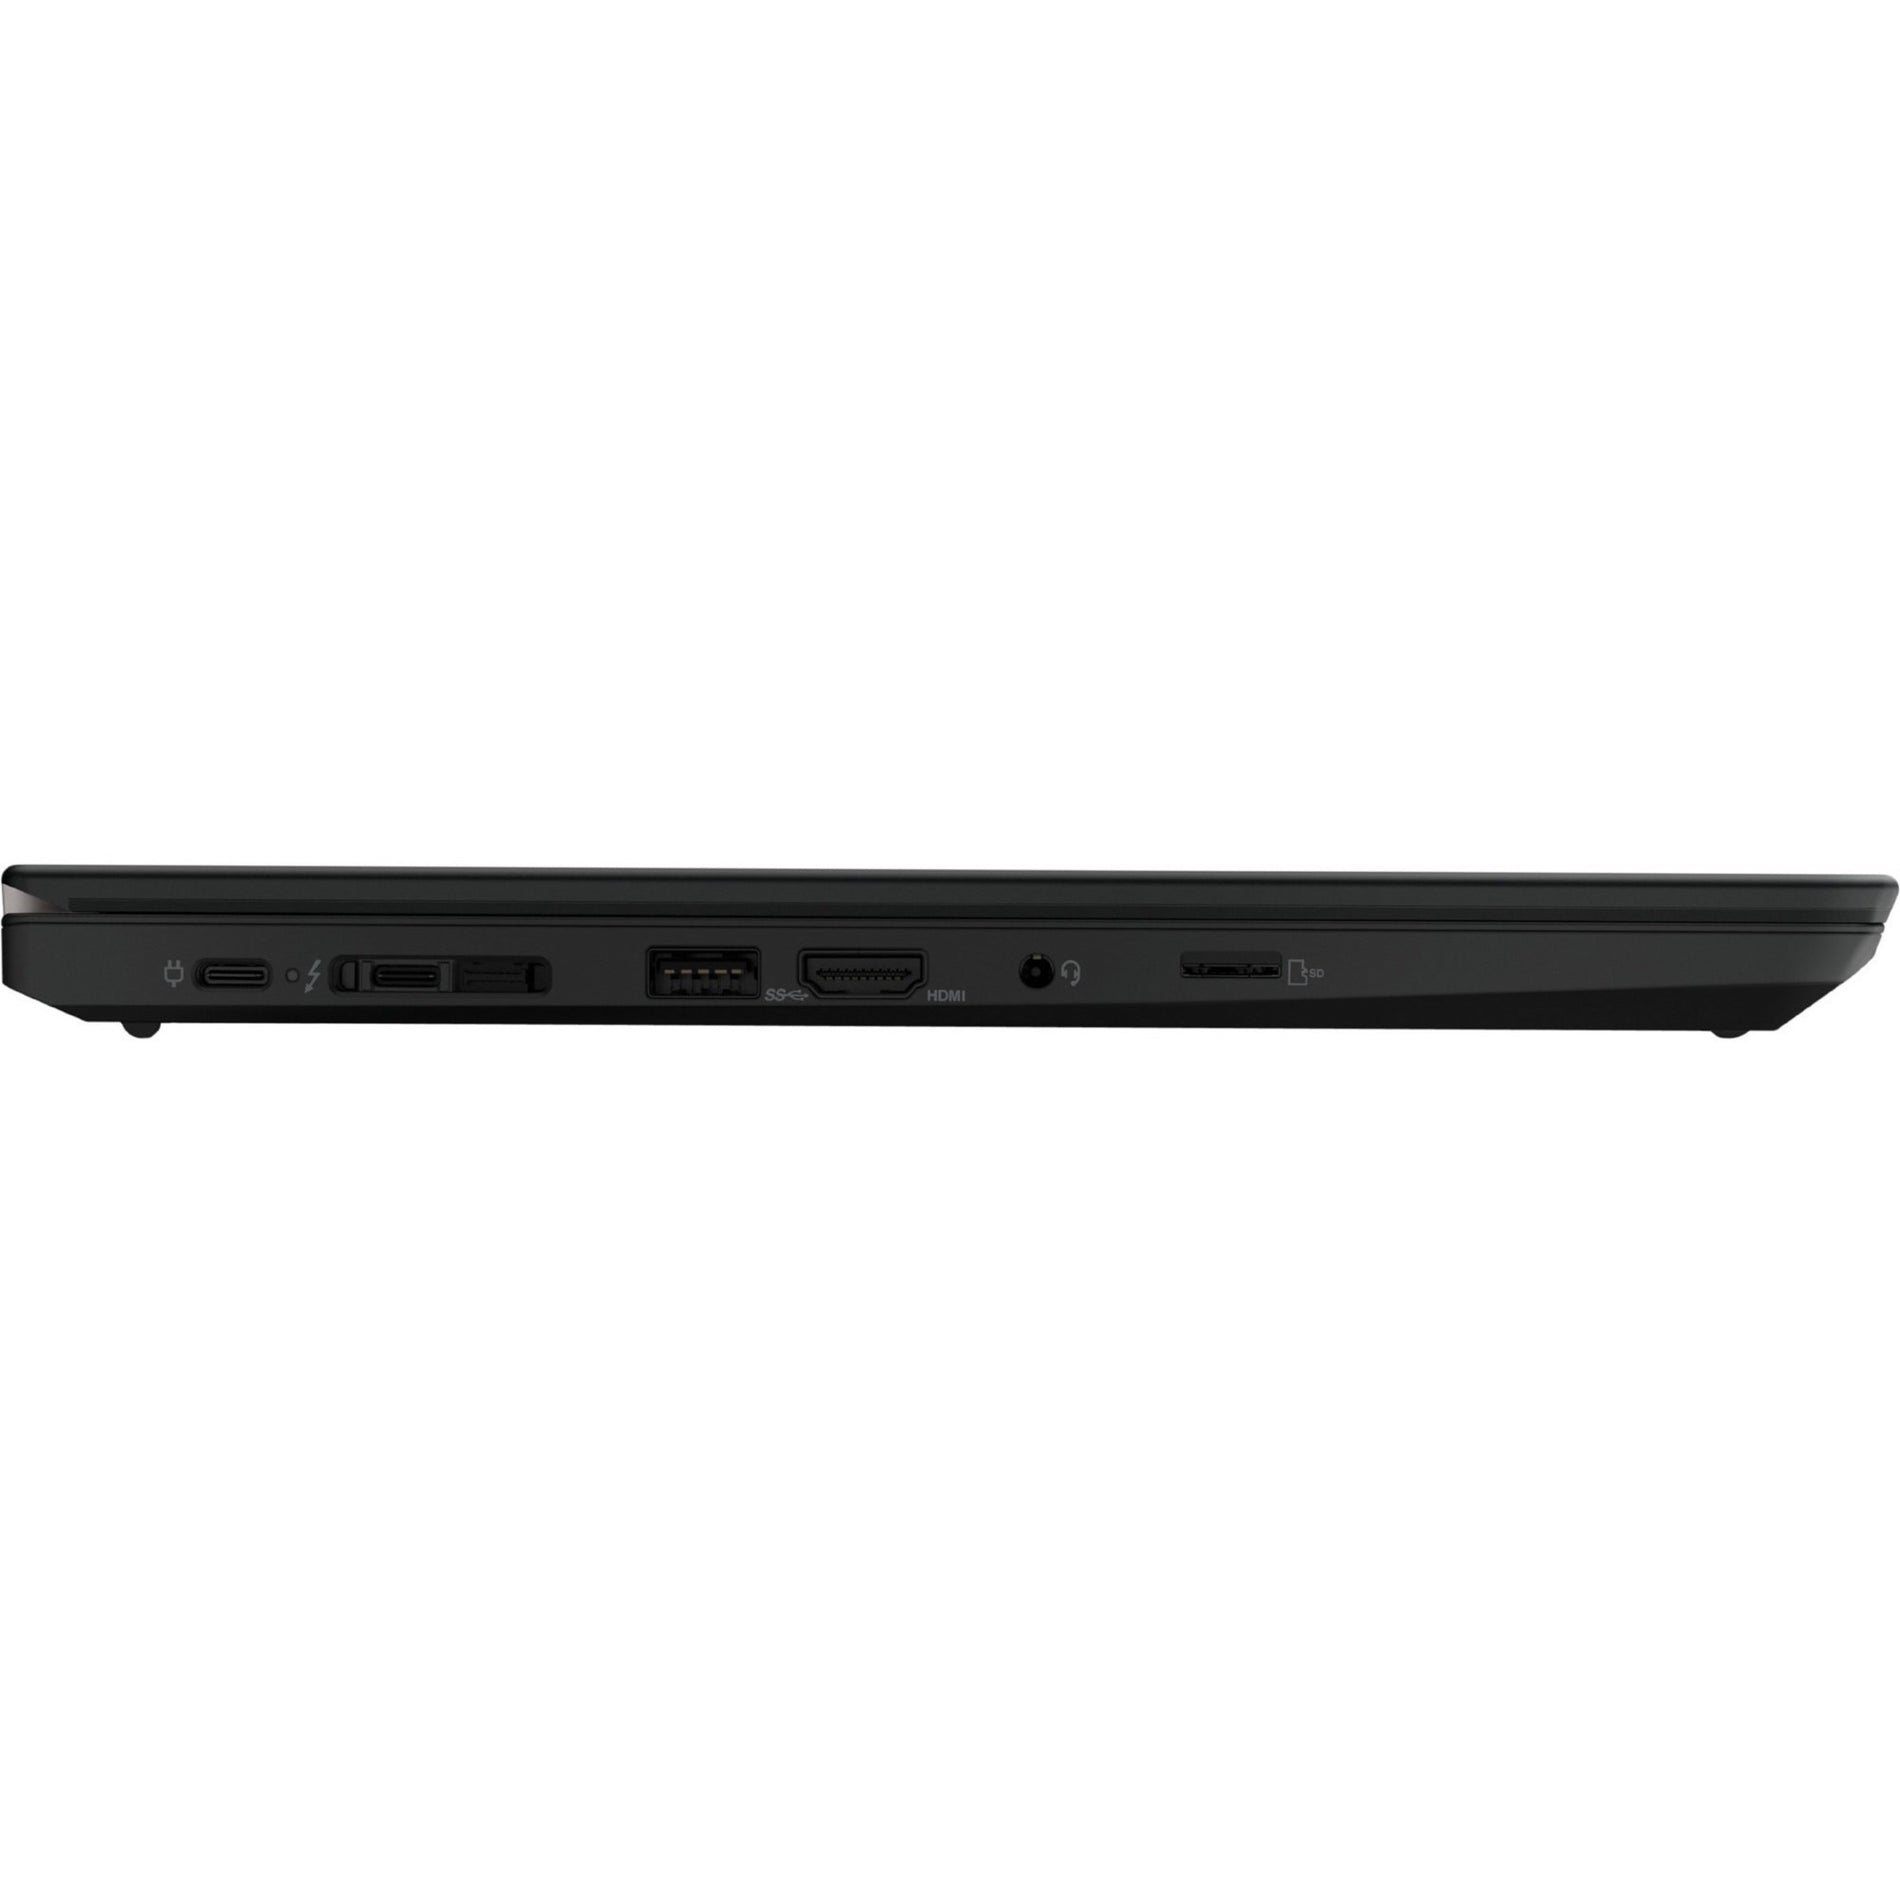 Lenovo 20XK005UUS ThinkPad T14 Gen 2 Notebook, Ryzen 5 PRO, 16GB RAM, 512GB SSD, Windows 10 Pro